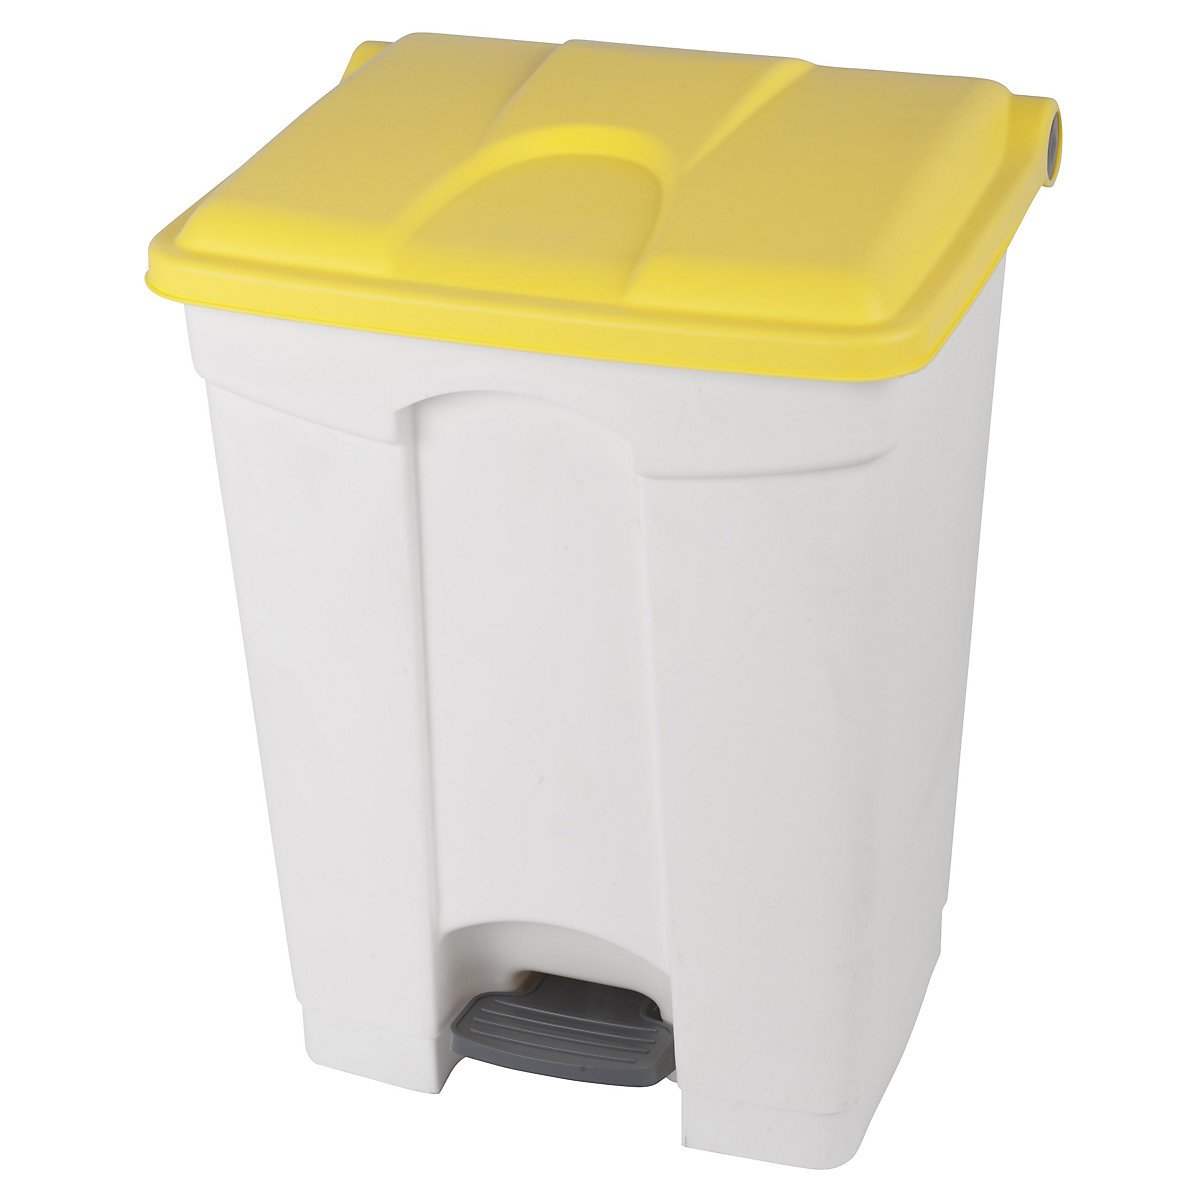 EUROKRAFTbasic – Afvalverzamelaar met pedaal, inhoud 70 l, b x h x d = 505 x 675 x 415 mm, wit, deksel geel